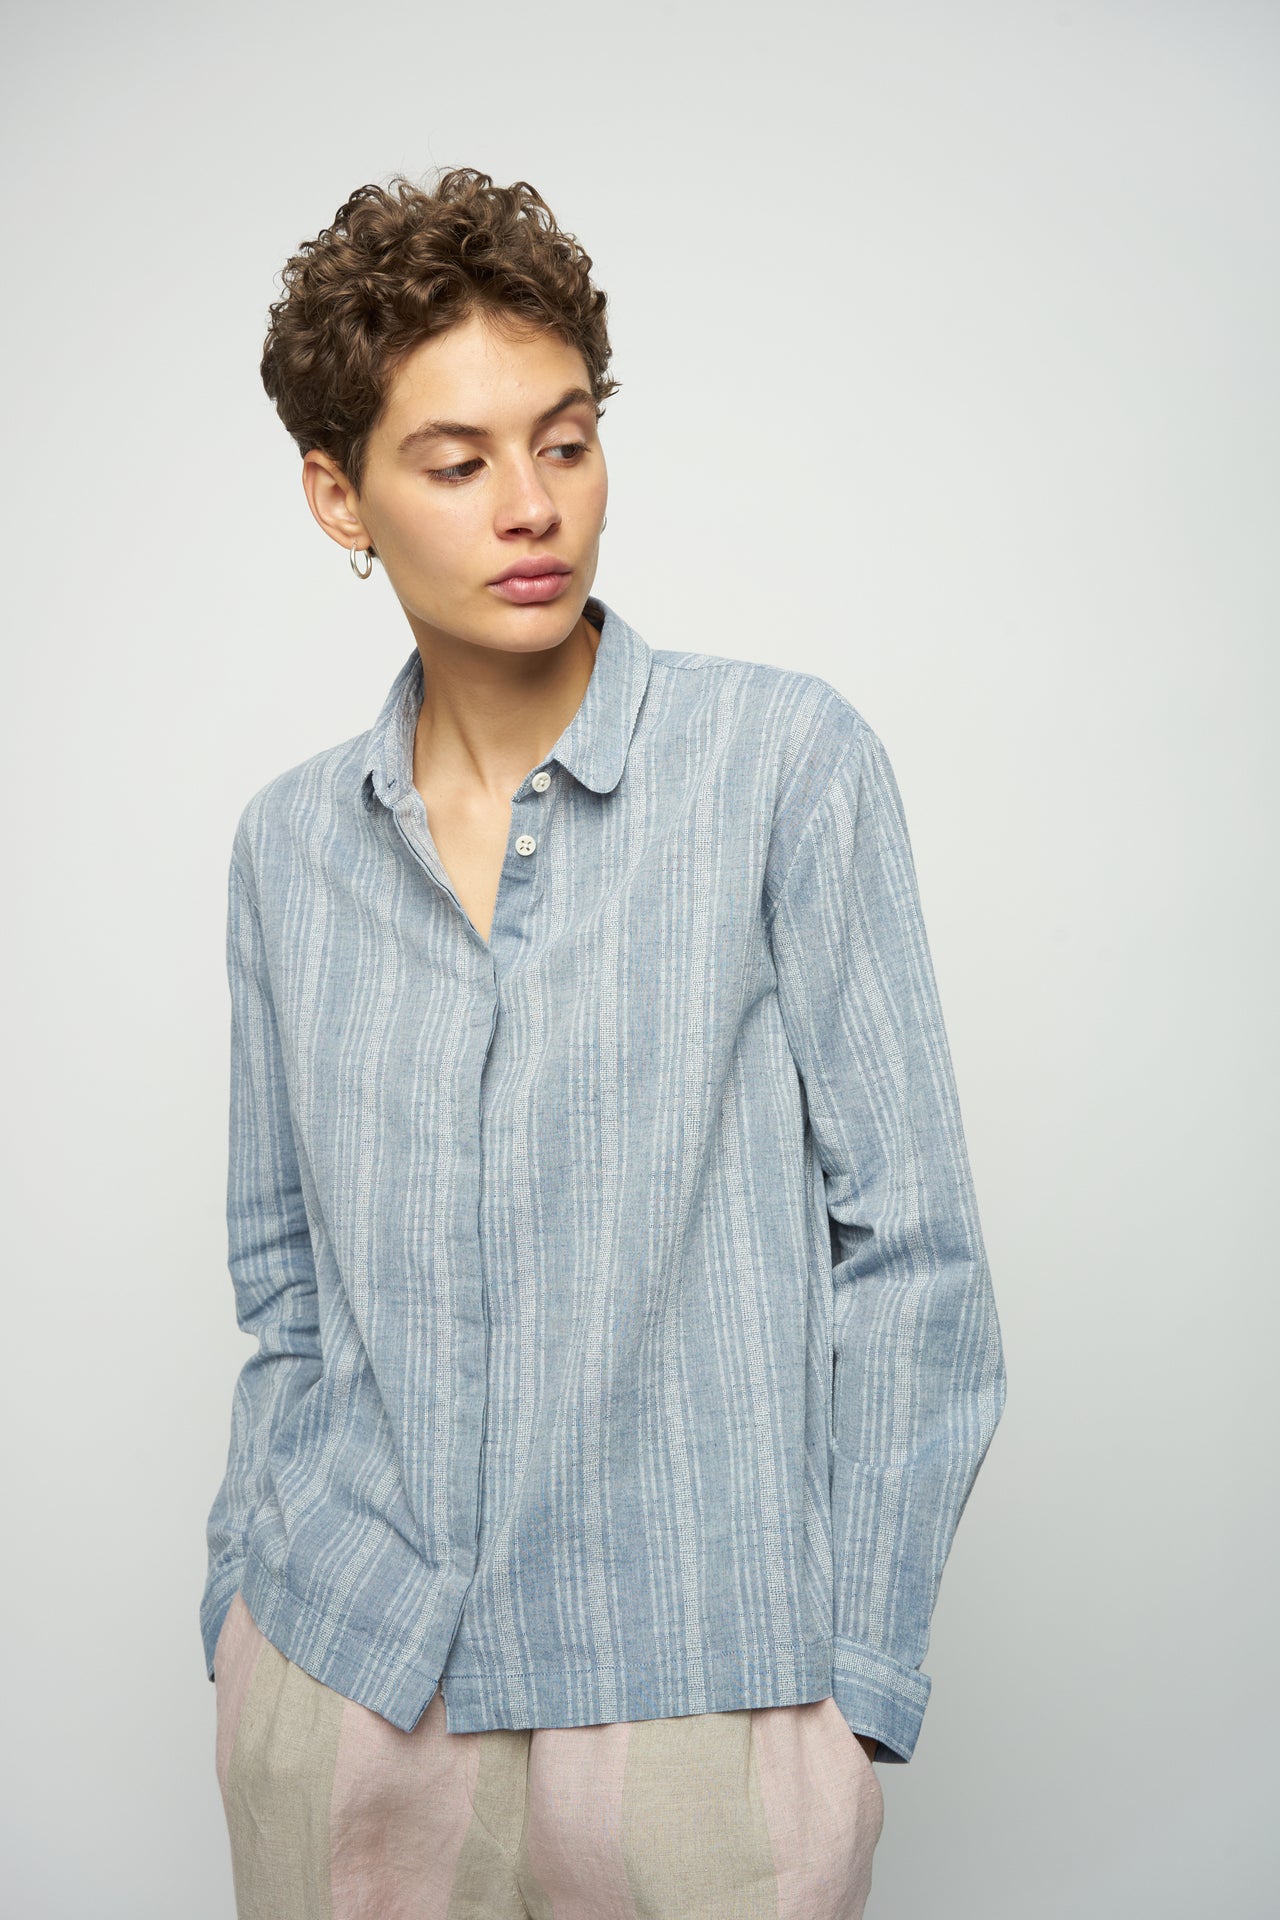 Cute Round Collar Shirt in a Grey Blue Japanese Organic Jacquard Cotton